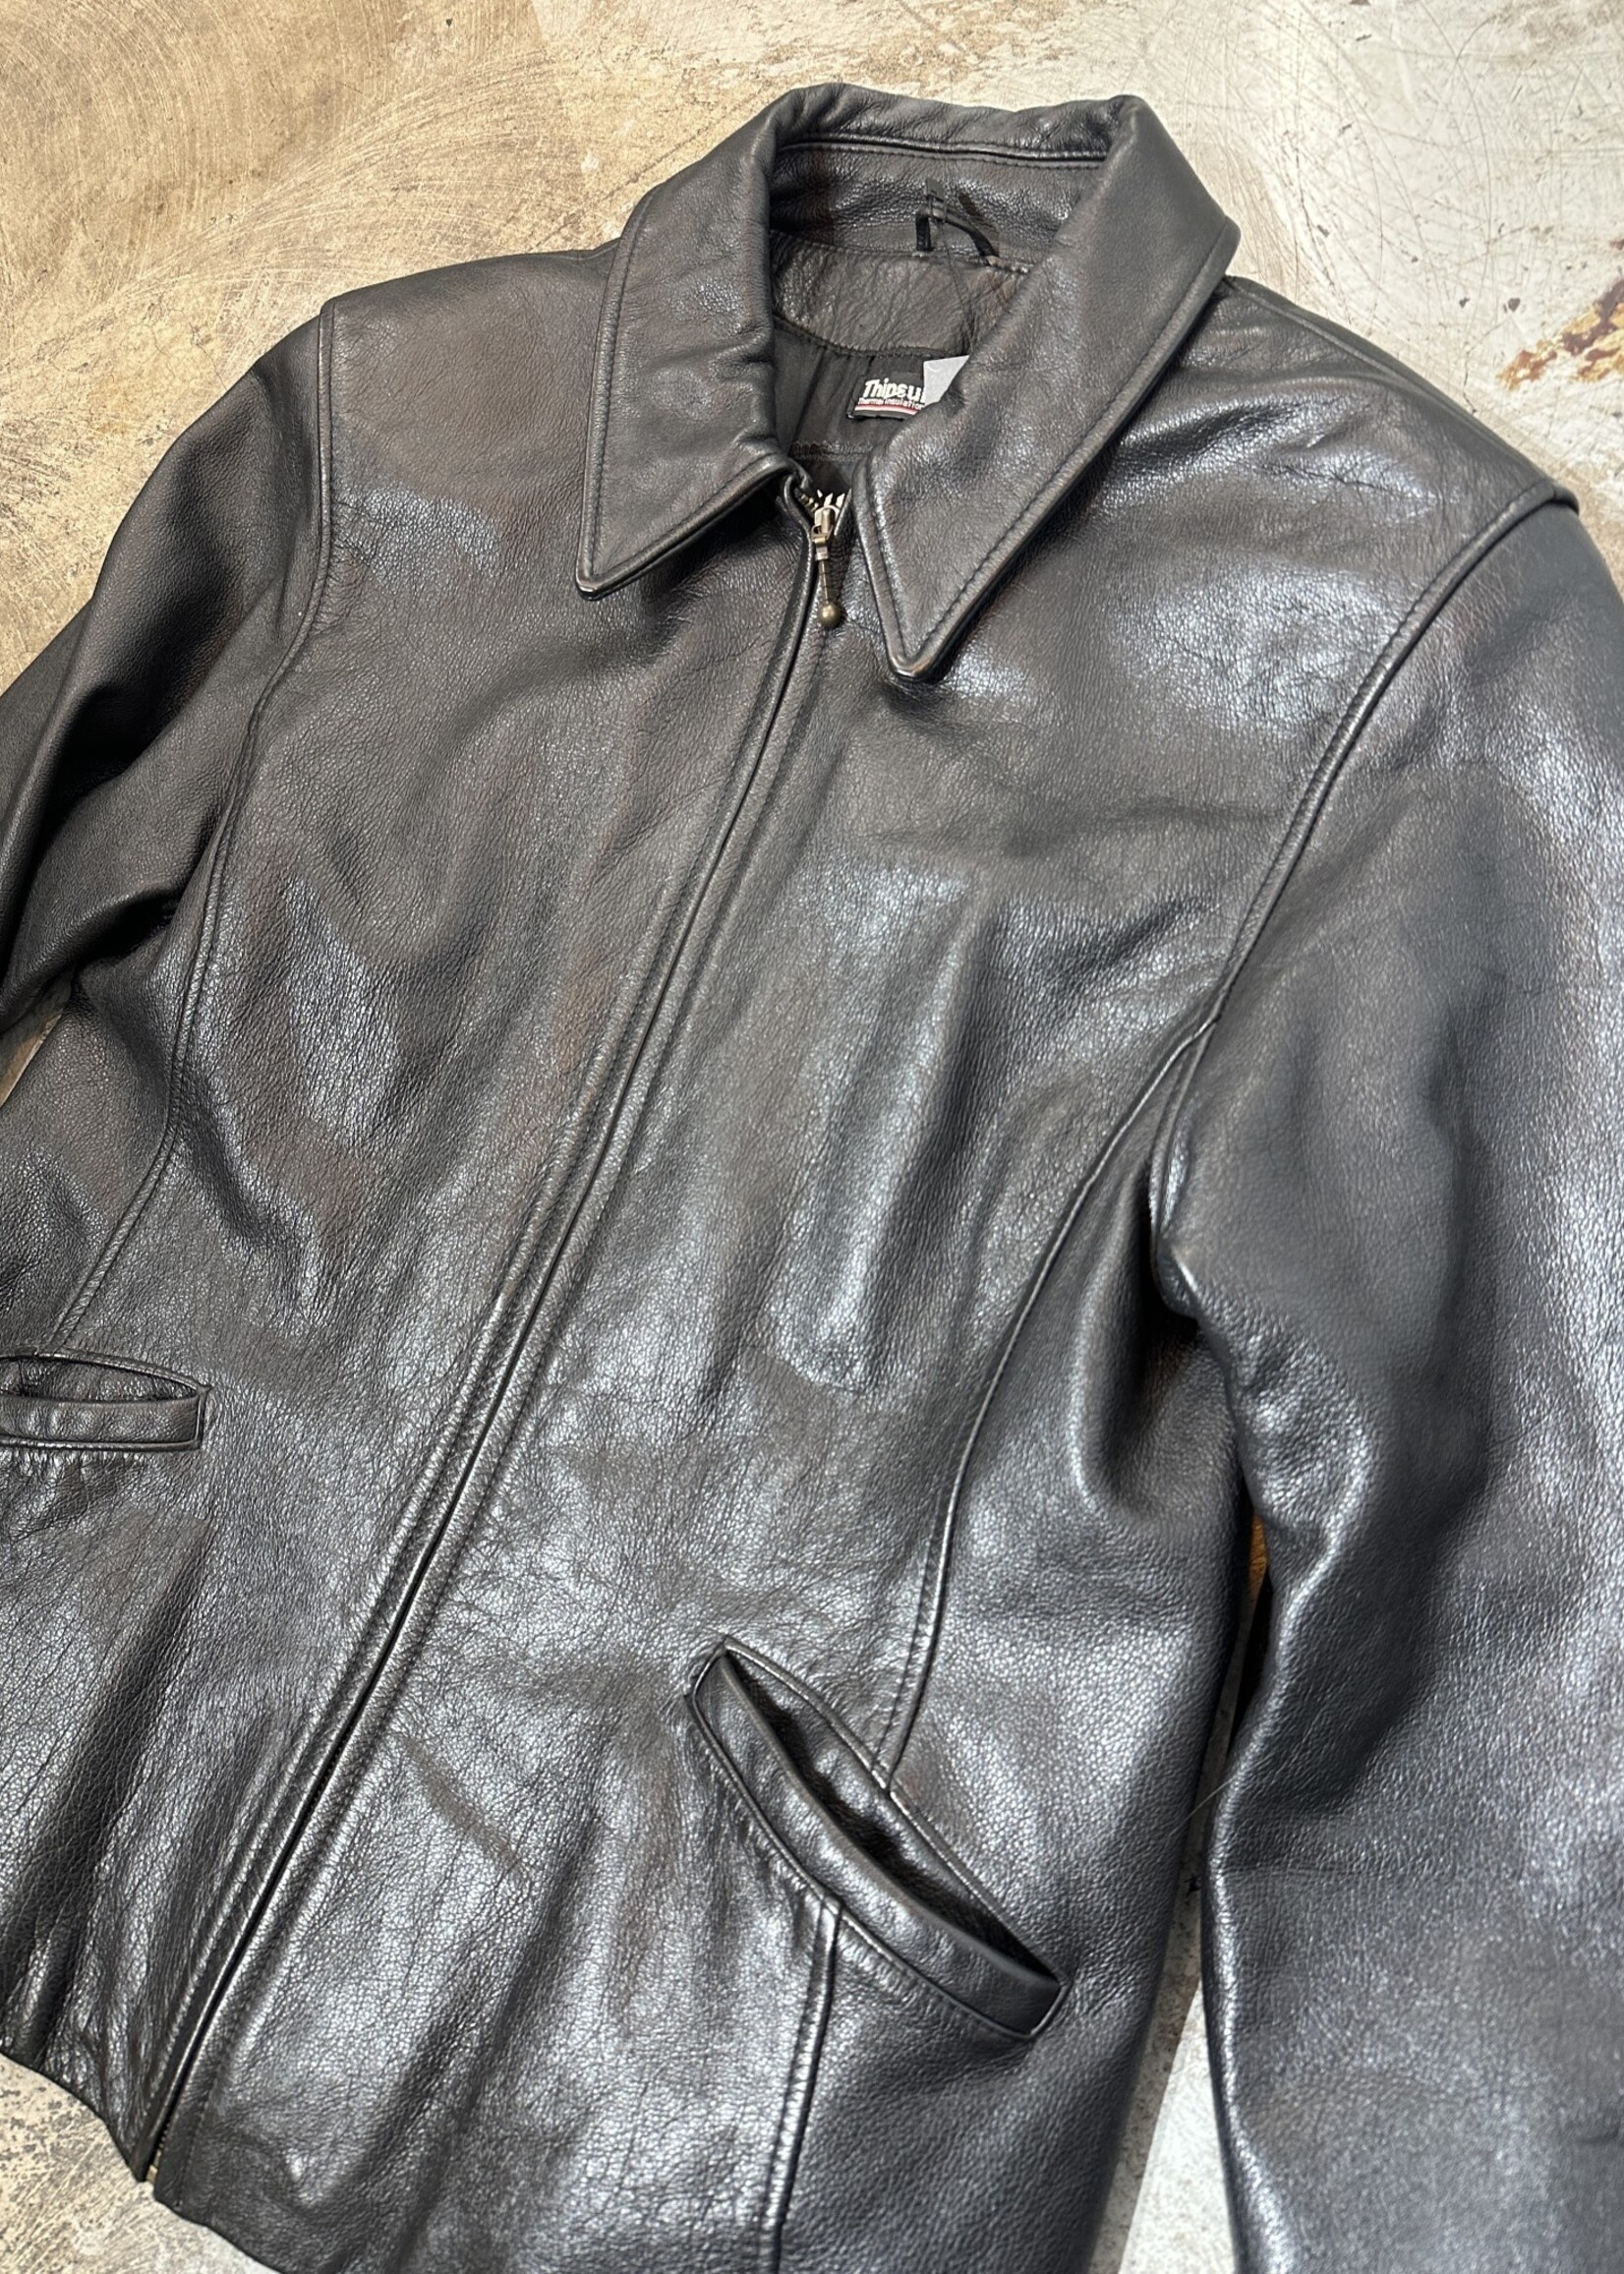 Wilsons Leather Zip Jacket As Is FEM XL